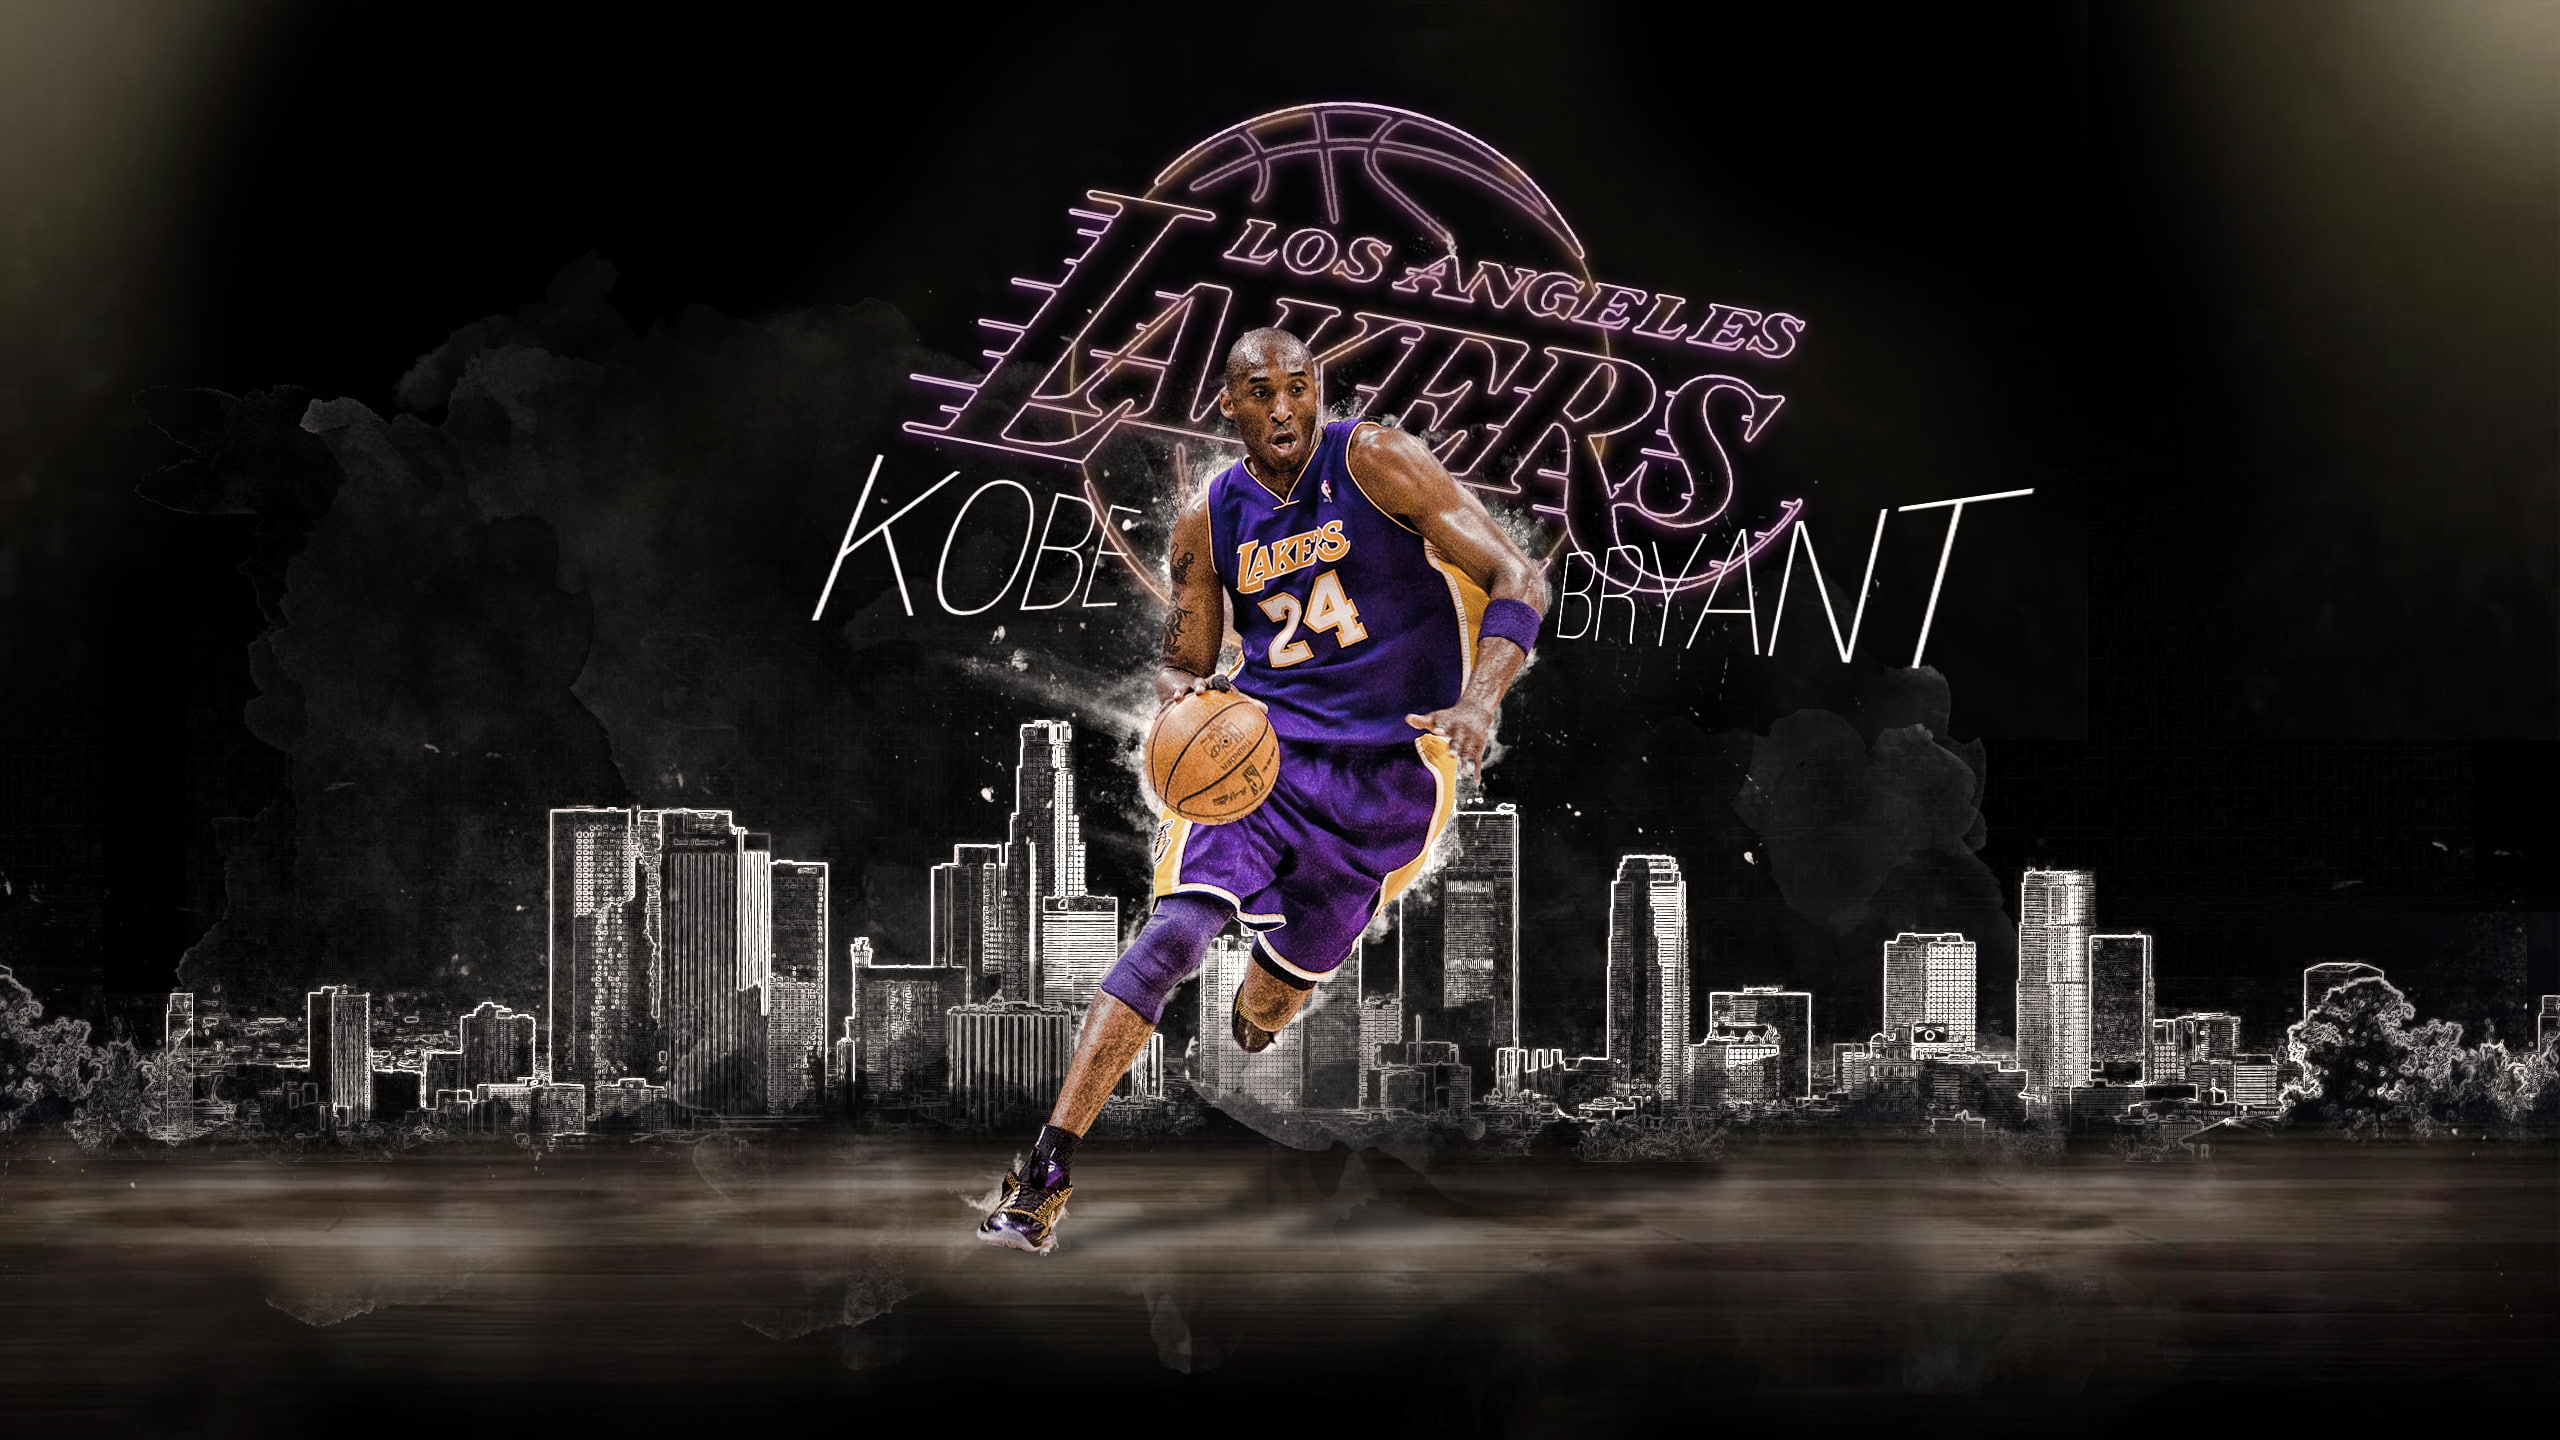 The ball, Basketball, Los Angeles, NBA, Lakers, Kobe Bryant